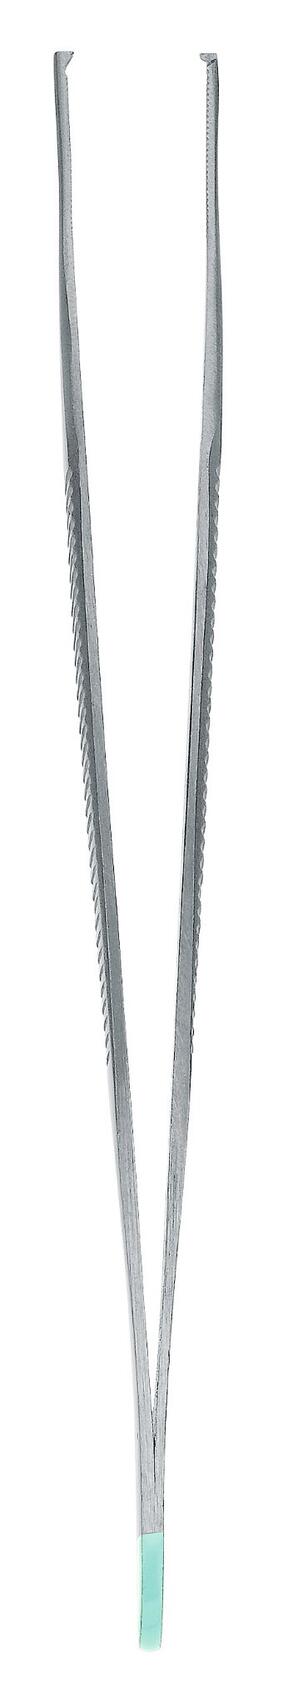 Peha instrument Micro-Adson tweezers straight 12cm